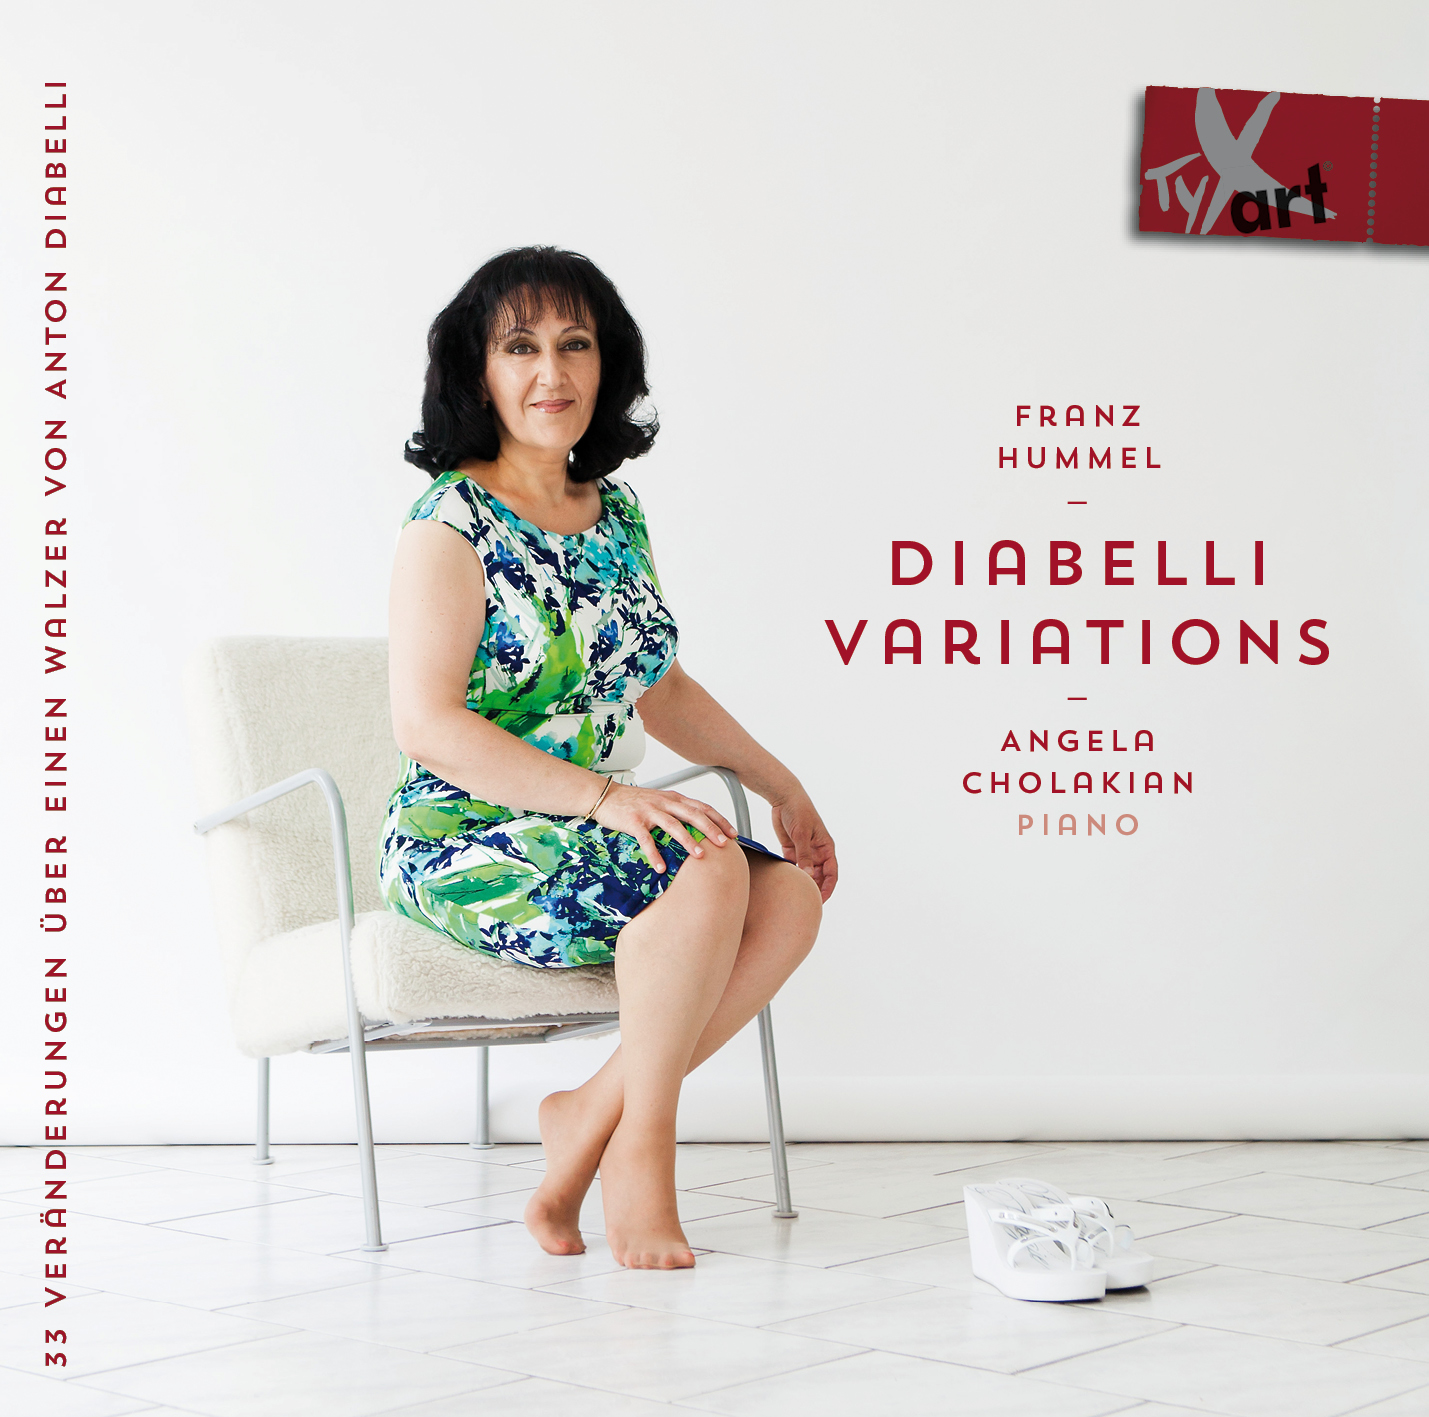 Hummel: Diabelli Variations - Angela Cholakian, Piano